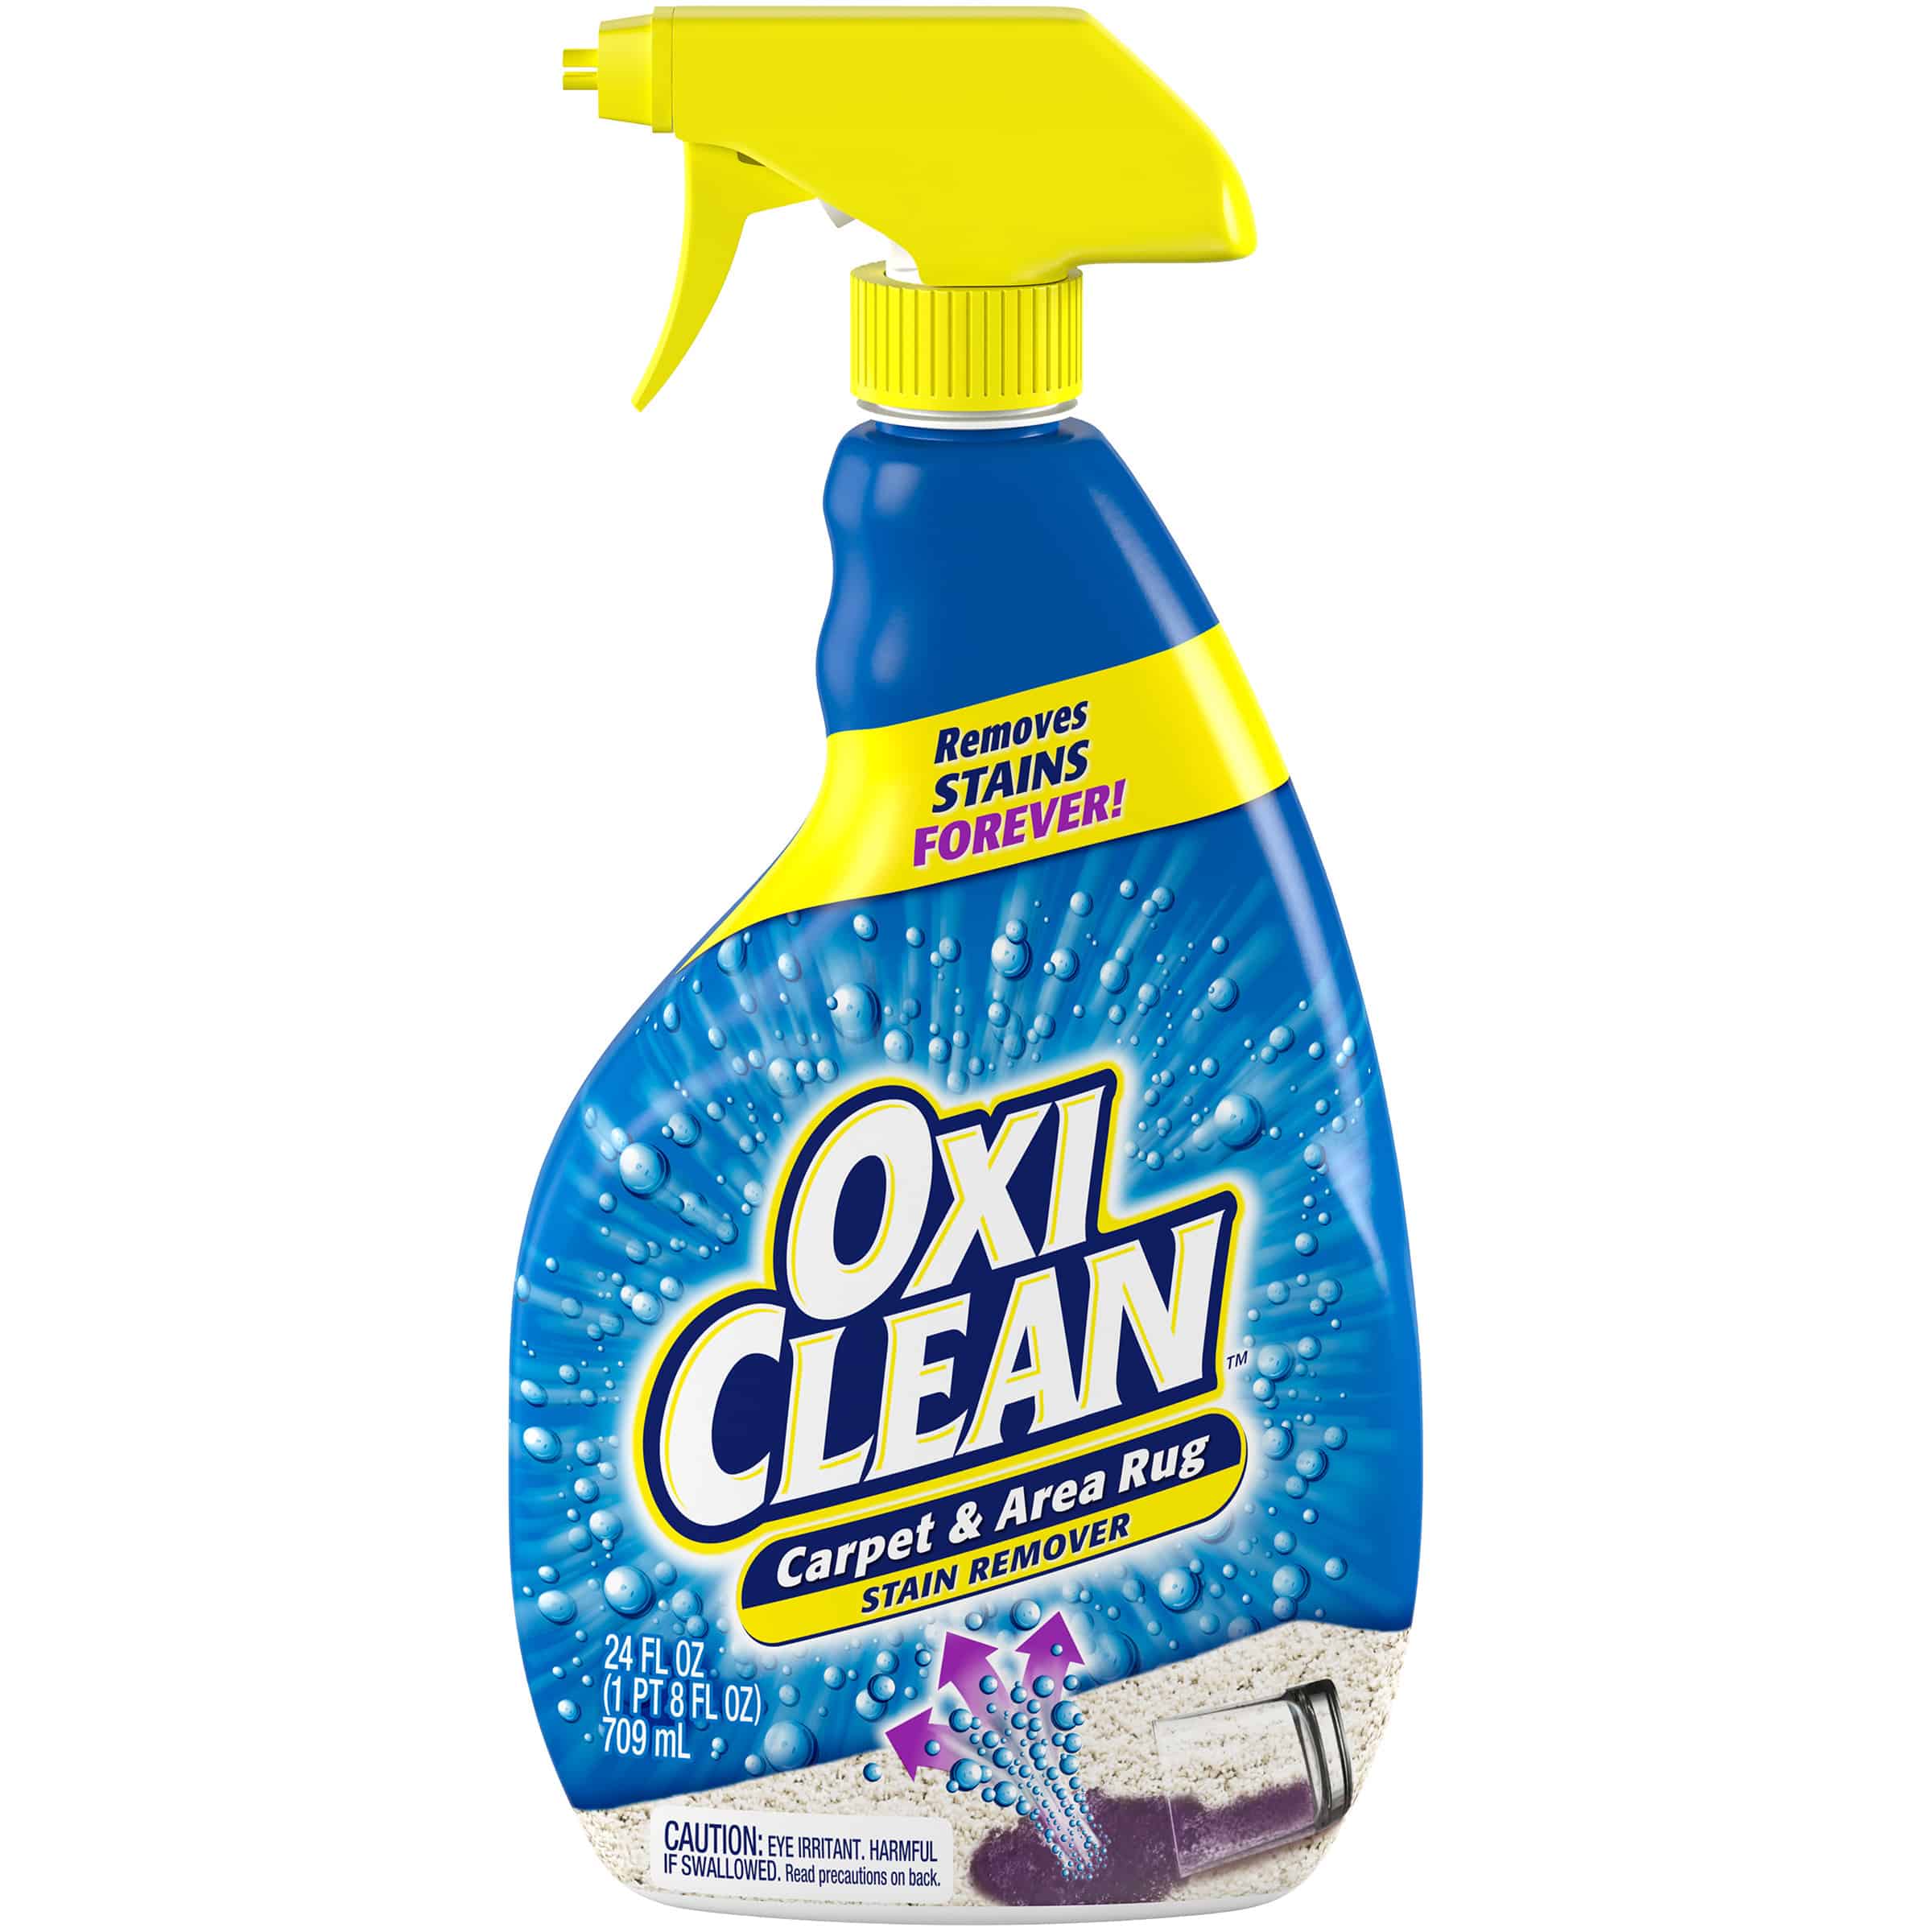 OxiClean Carpet & Area Rug Stain Remover Spray, 24 oz.